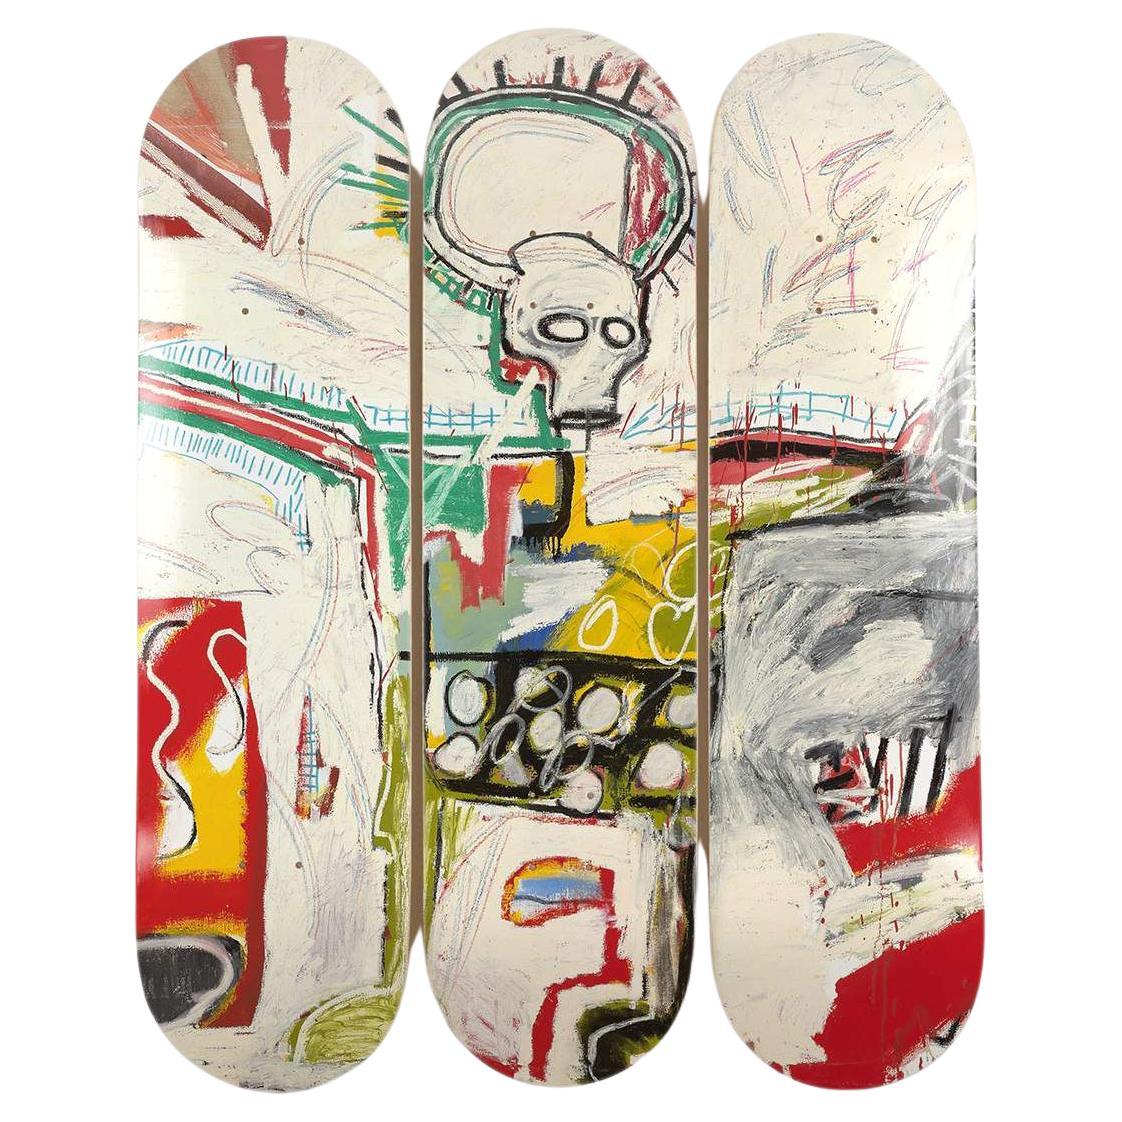 Untitled 'Rotterdam' Skateboard Decks after Jean-Michel Basquiat